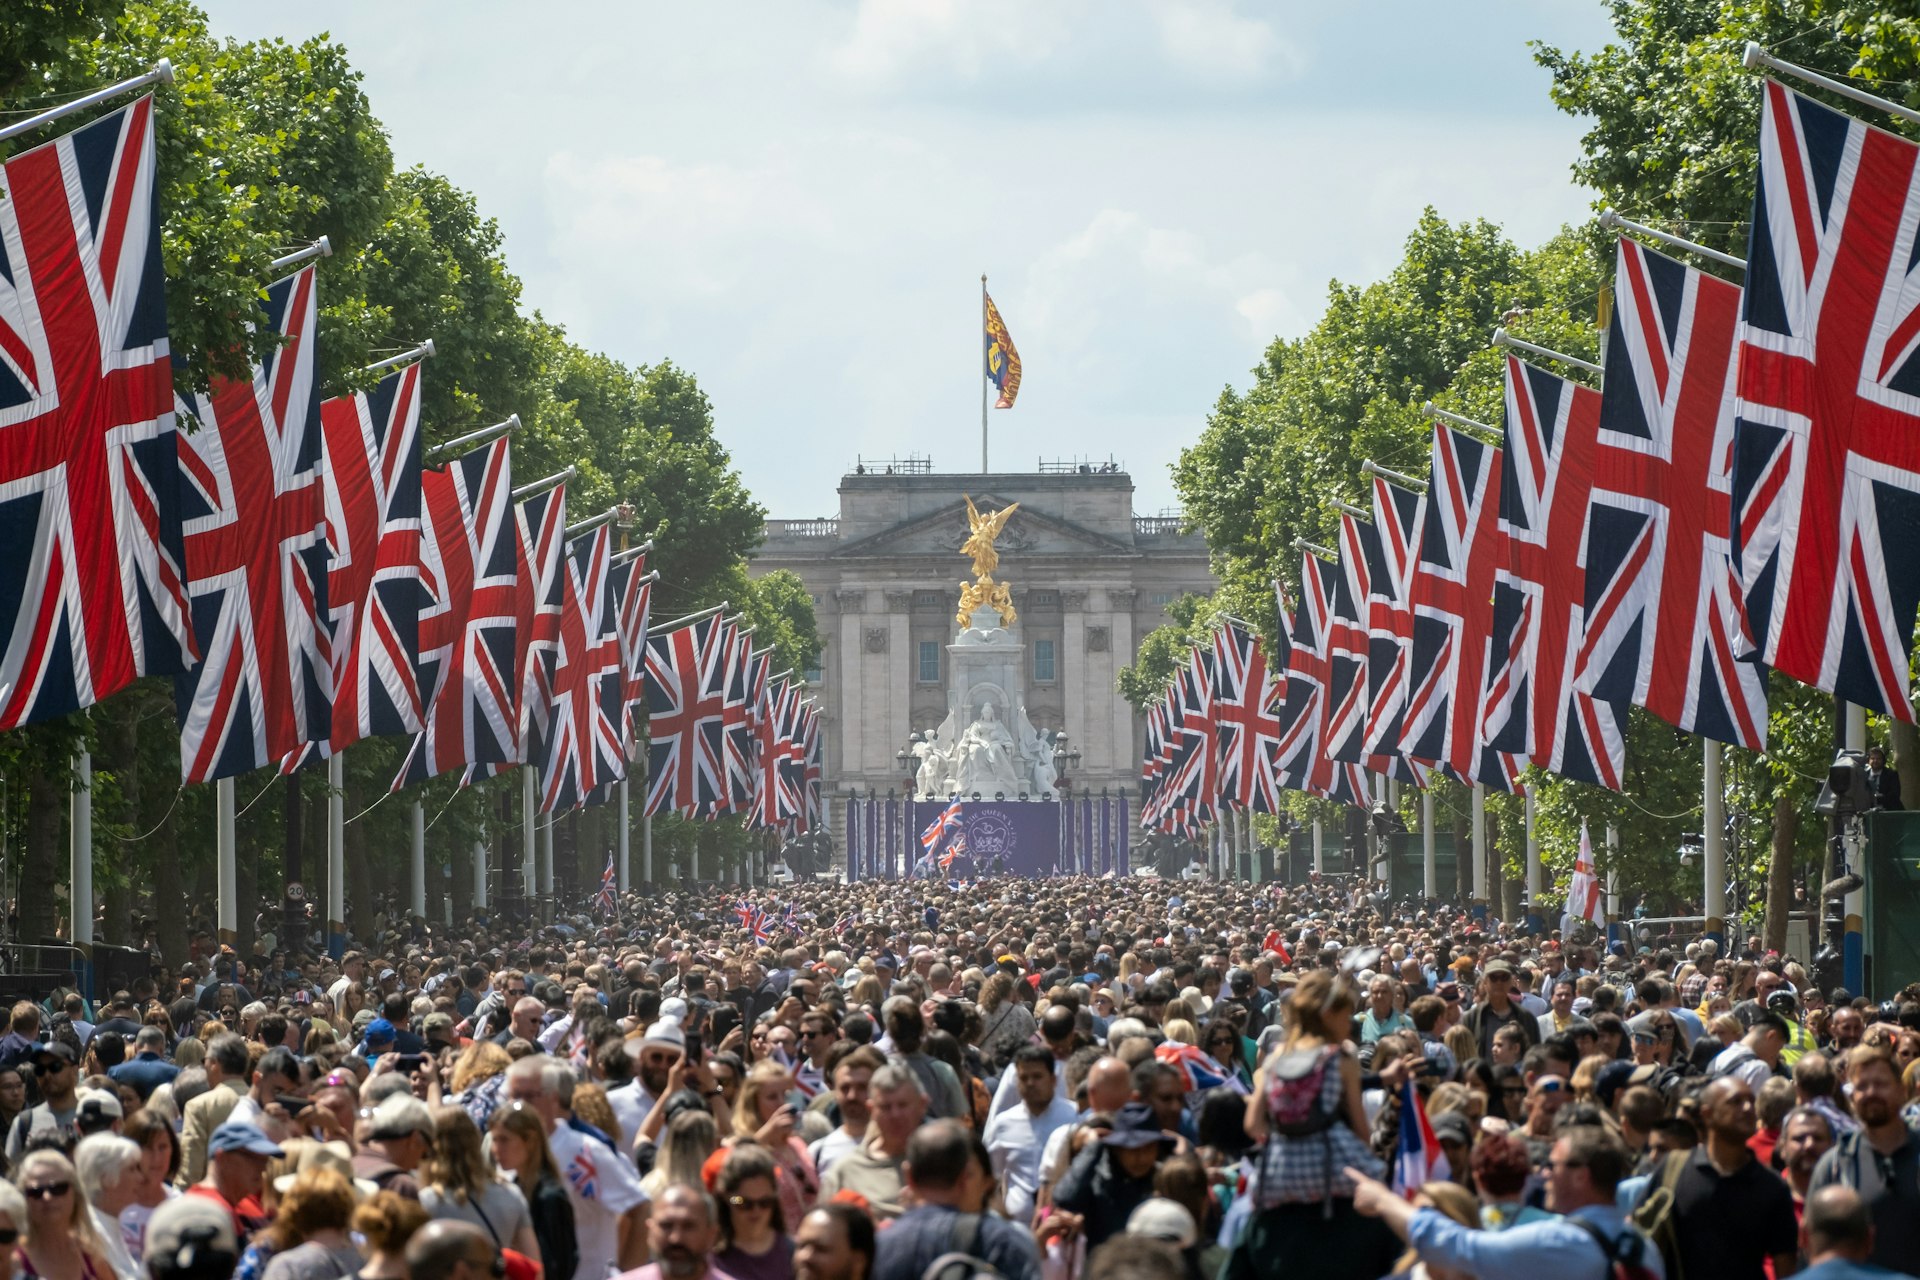 Crowds of people holding Union Jack flags on the Mall leading to Buckingham Palace, London, England, United Kingdom